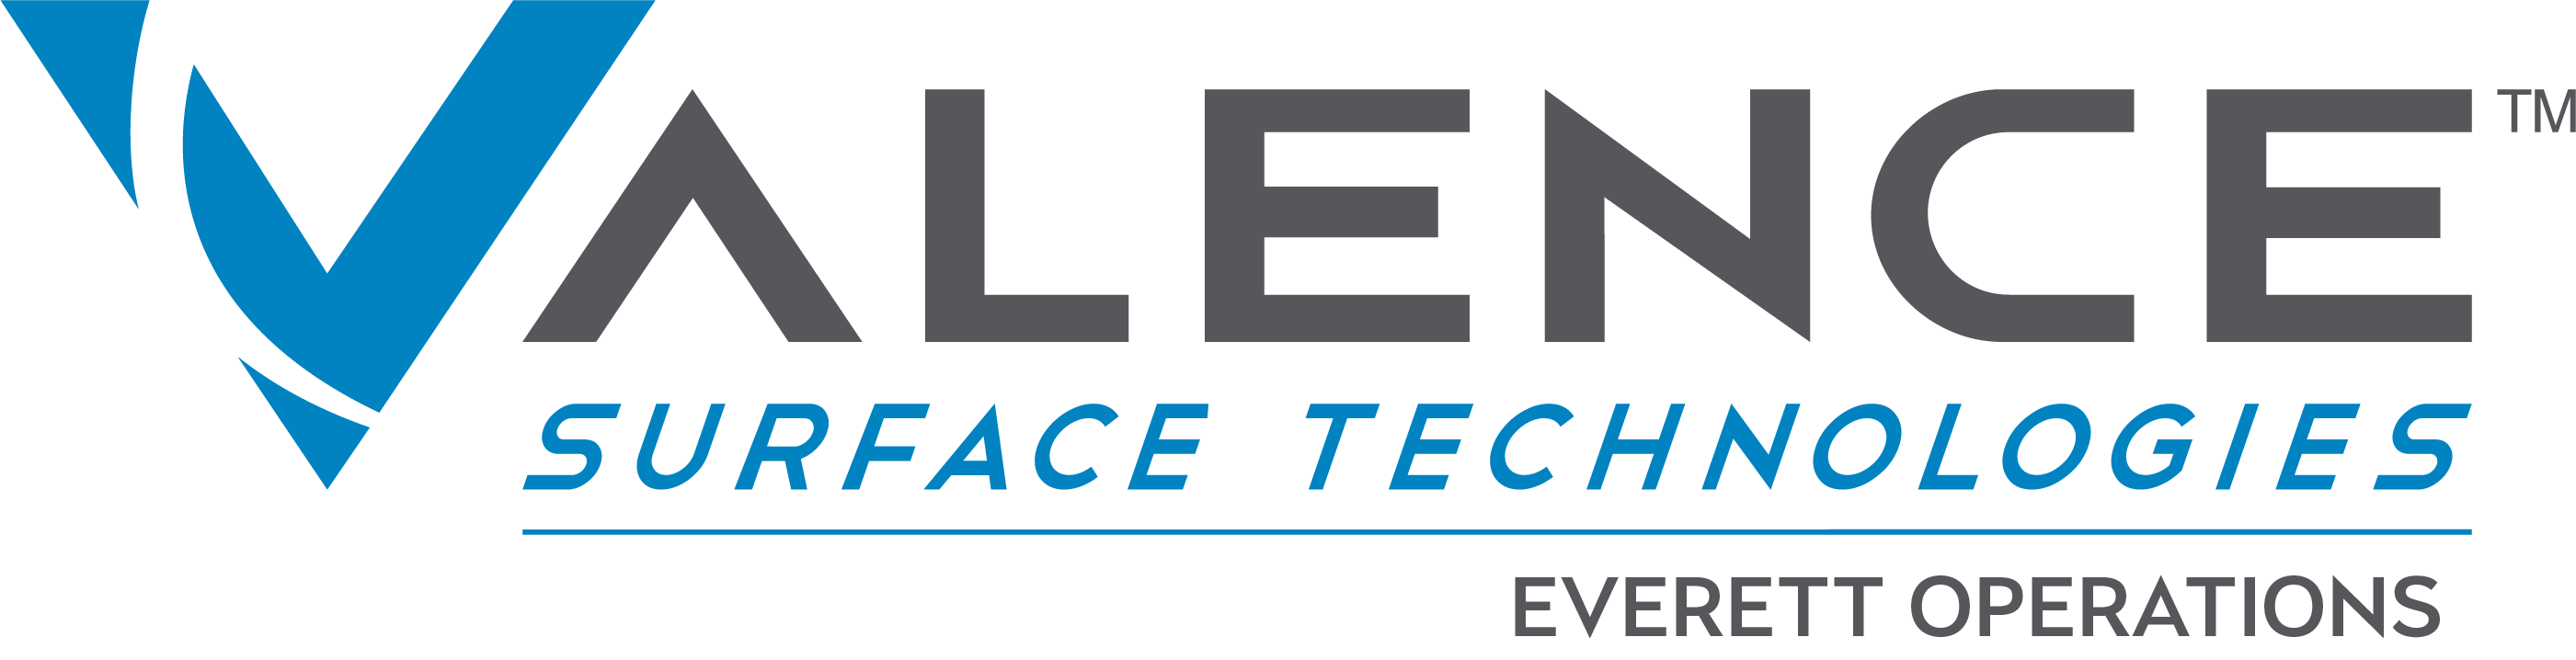 Valence Surface Technologies Everett operations logo